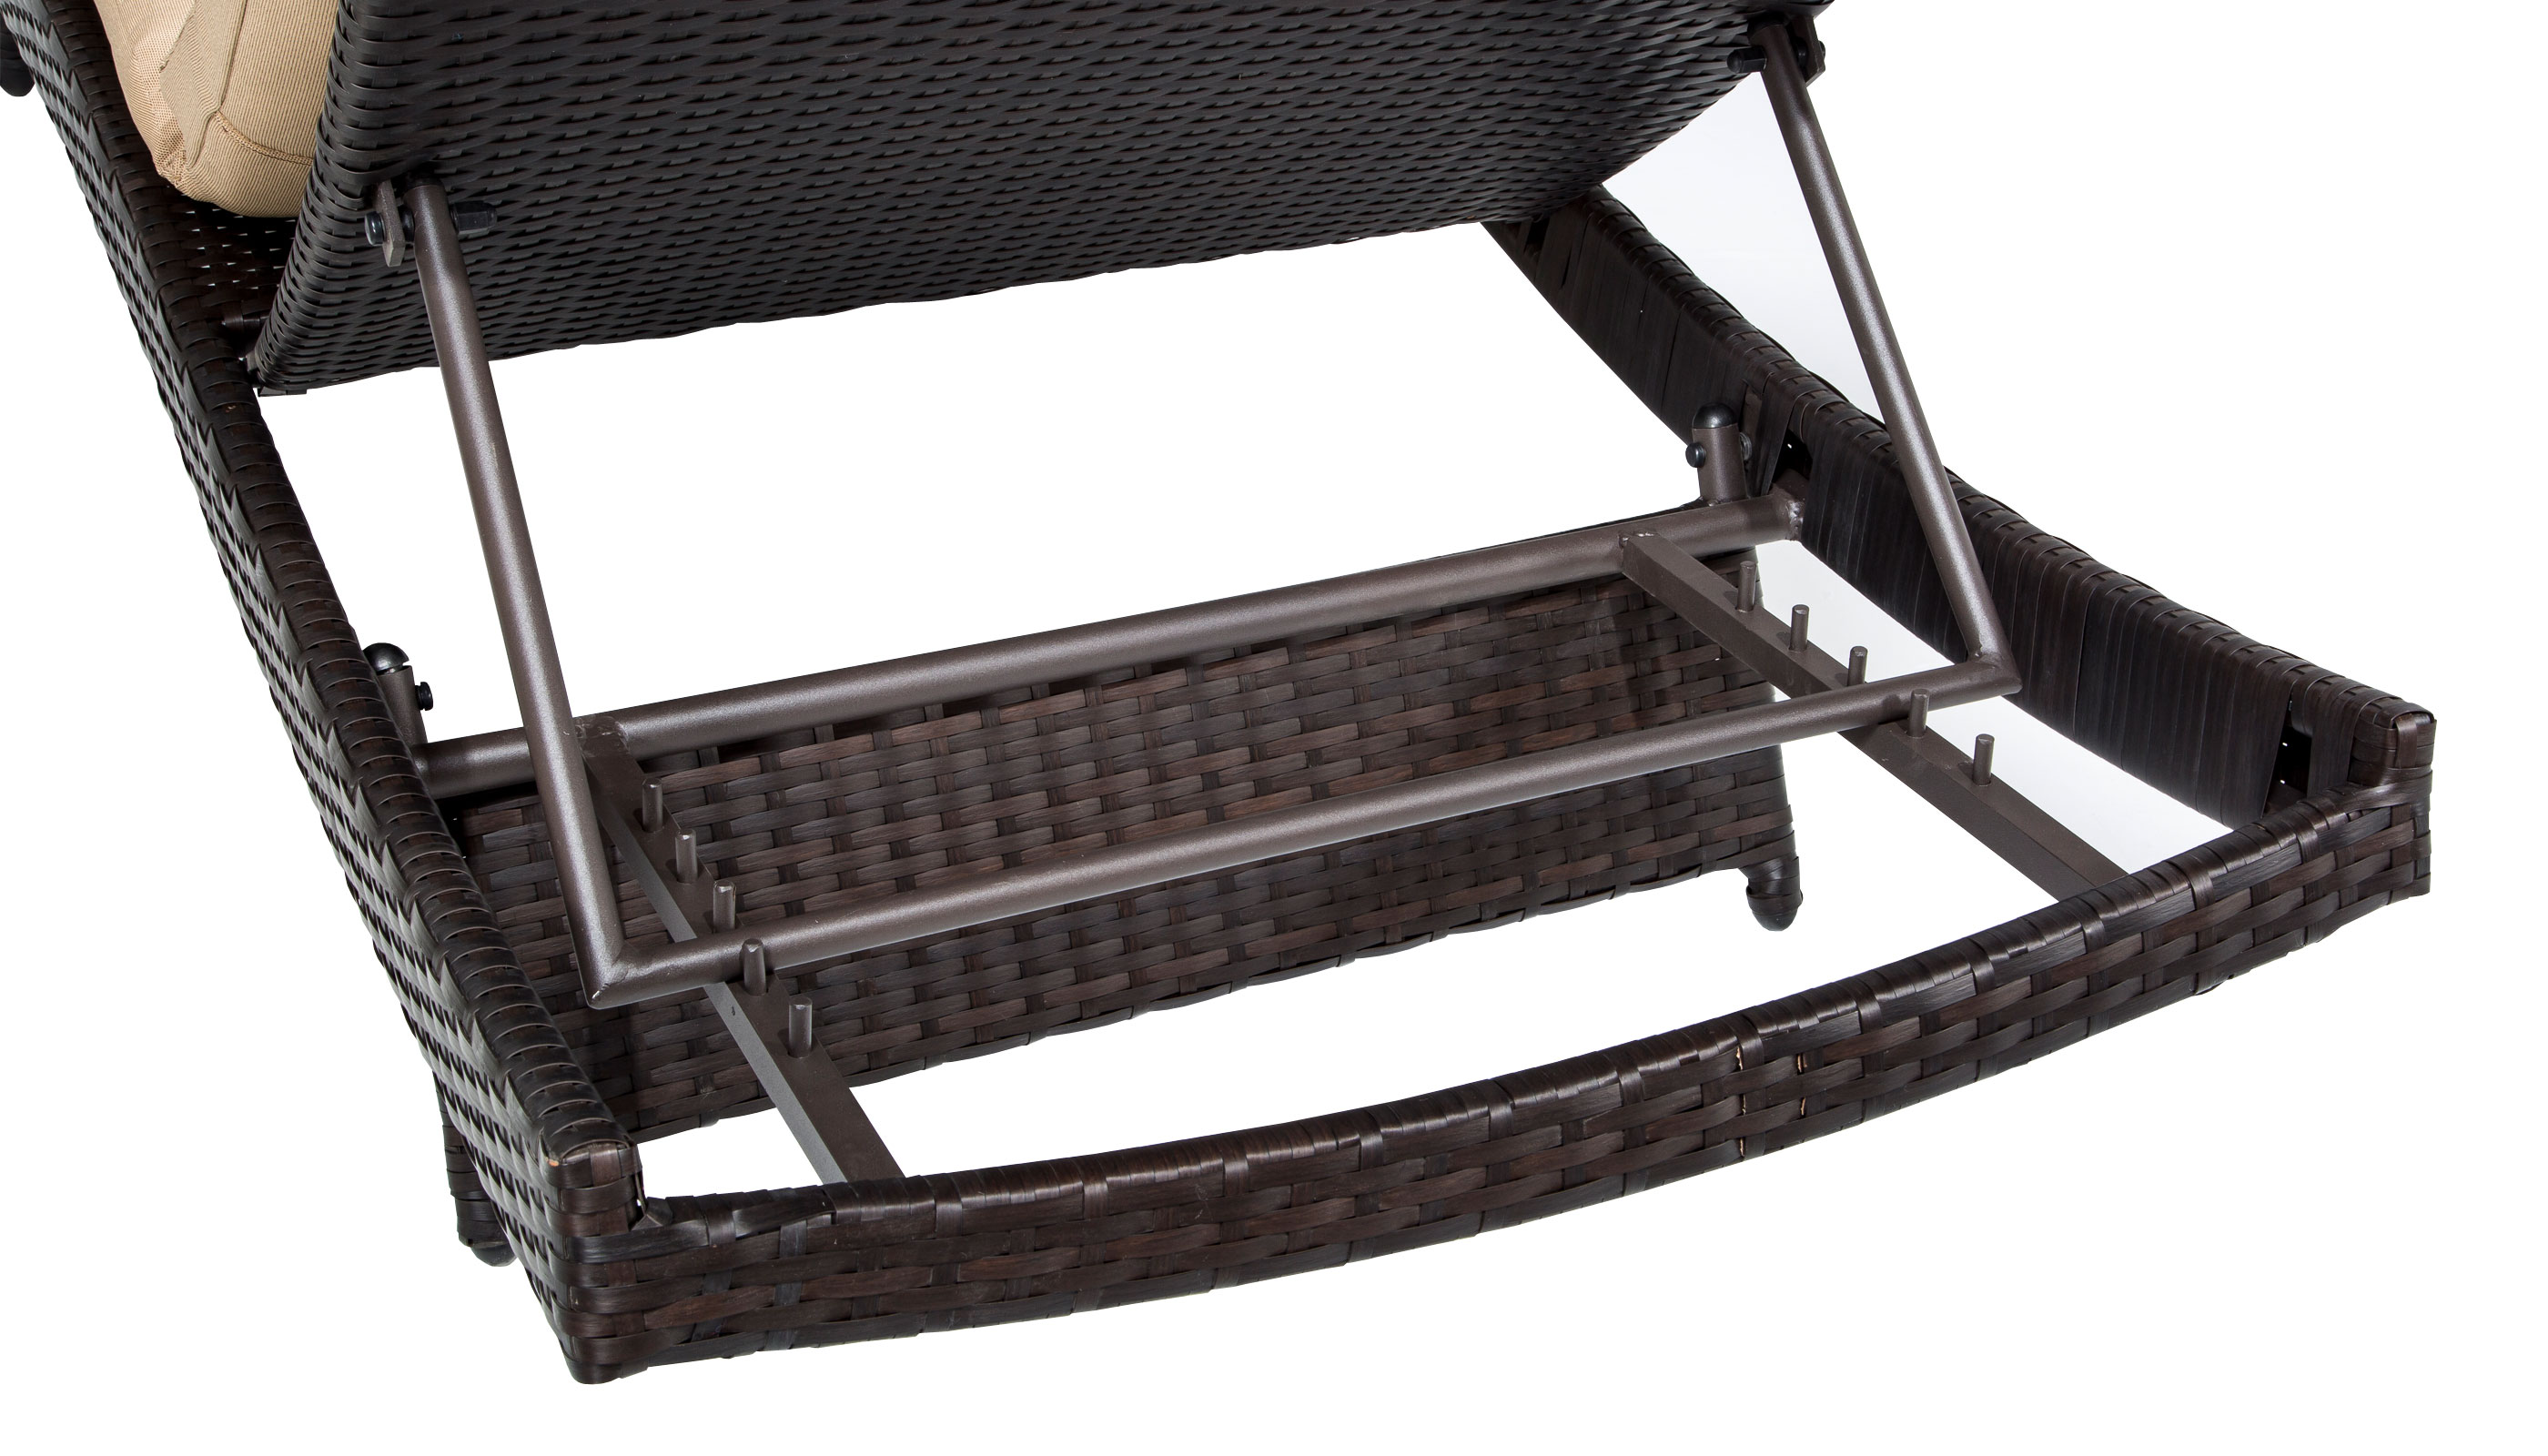 Bali Chaise Set of 2 Outdoor Wicker Patio Furniture - TK Classics